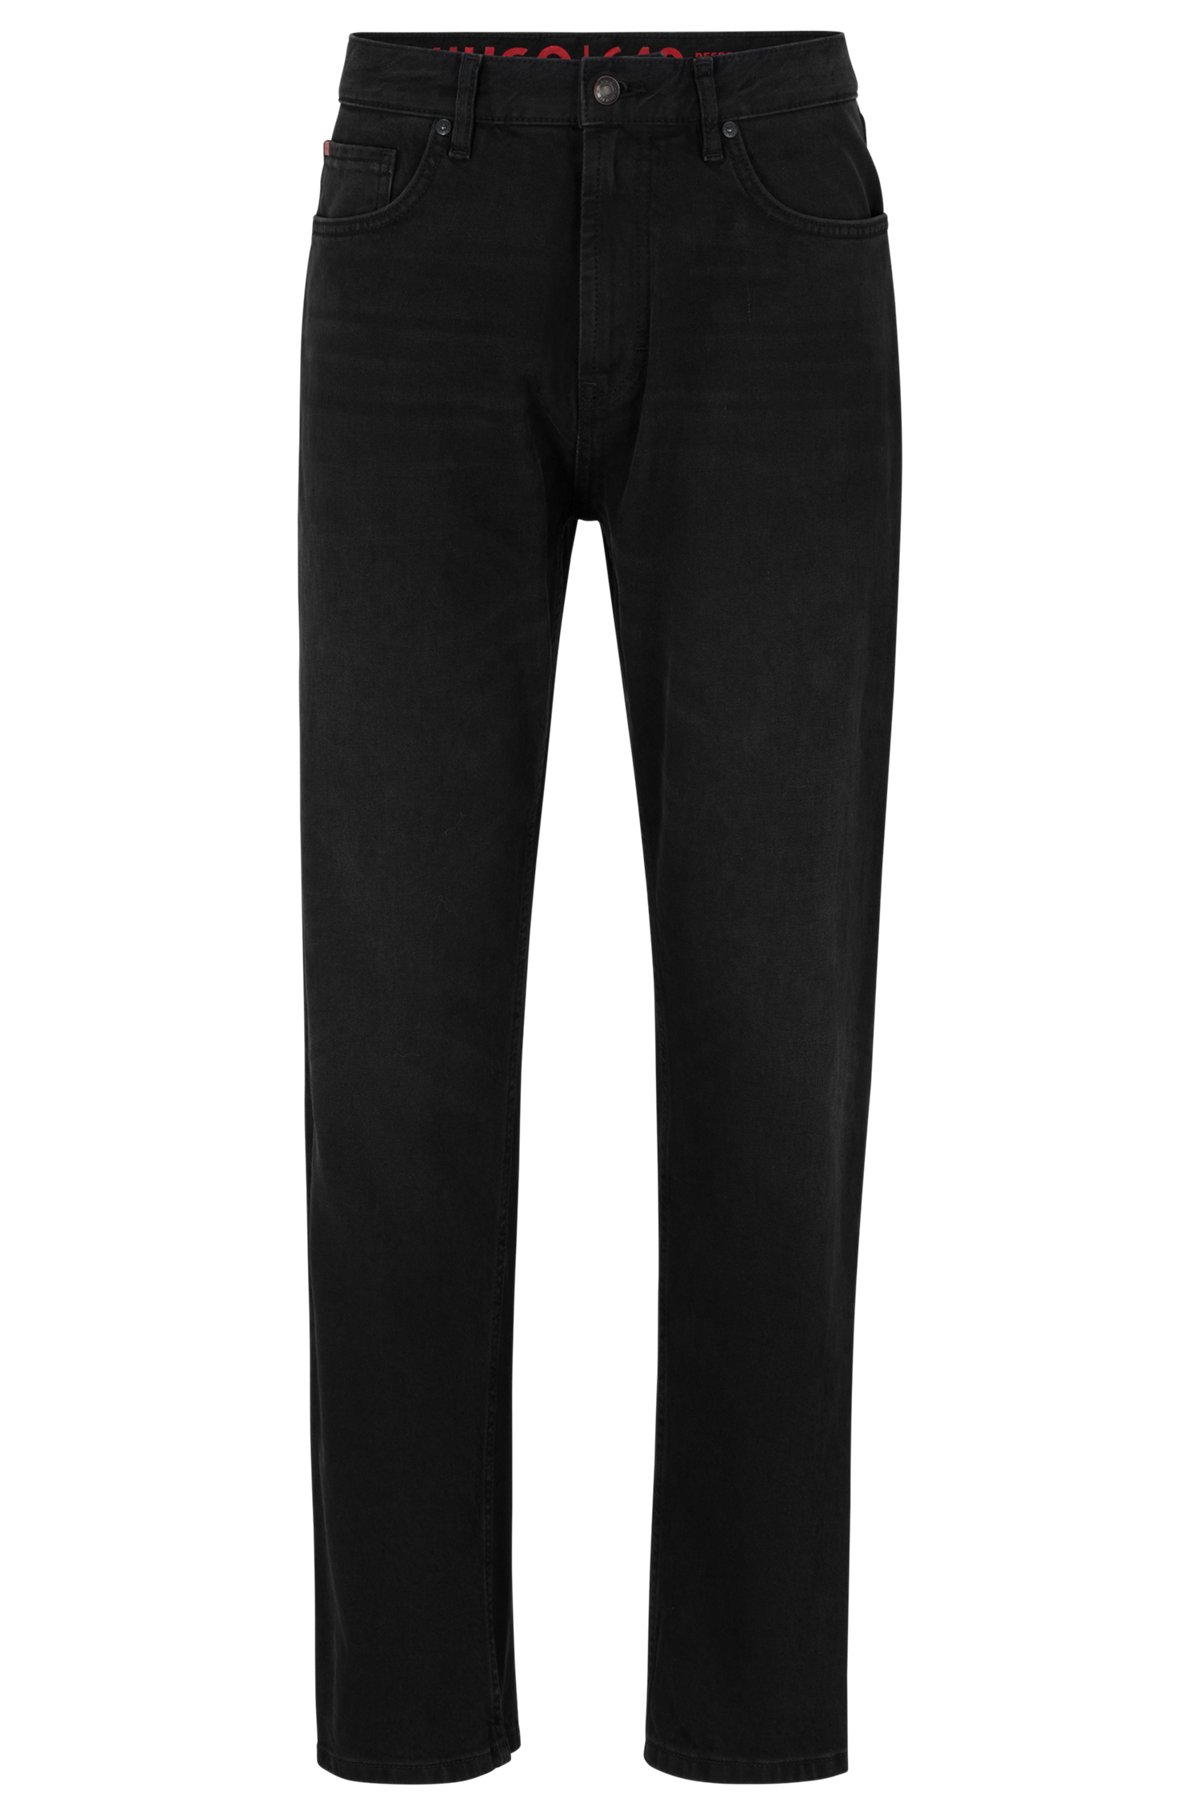 HUGO - Regular-fit jeans in black rigid denim